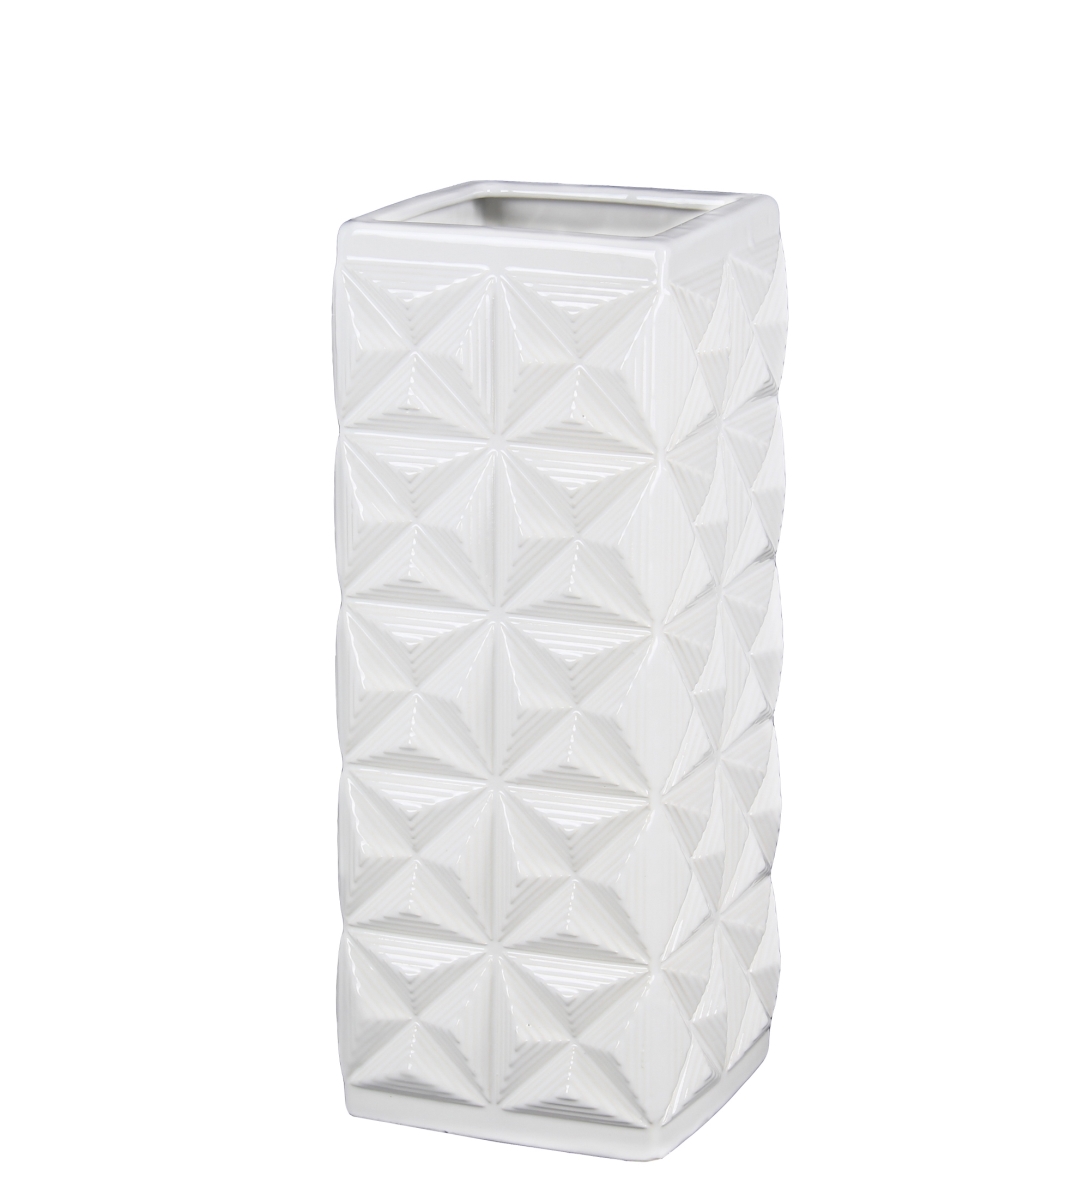 45216 Ceramic Vase, White - Large